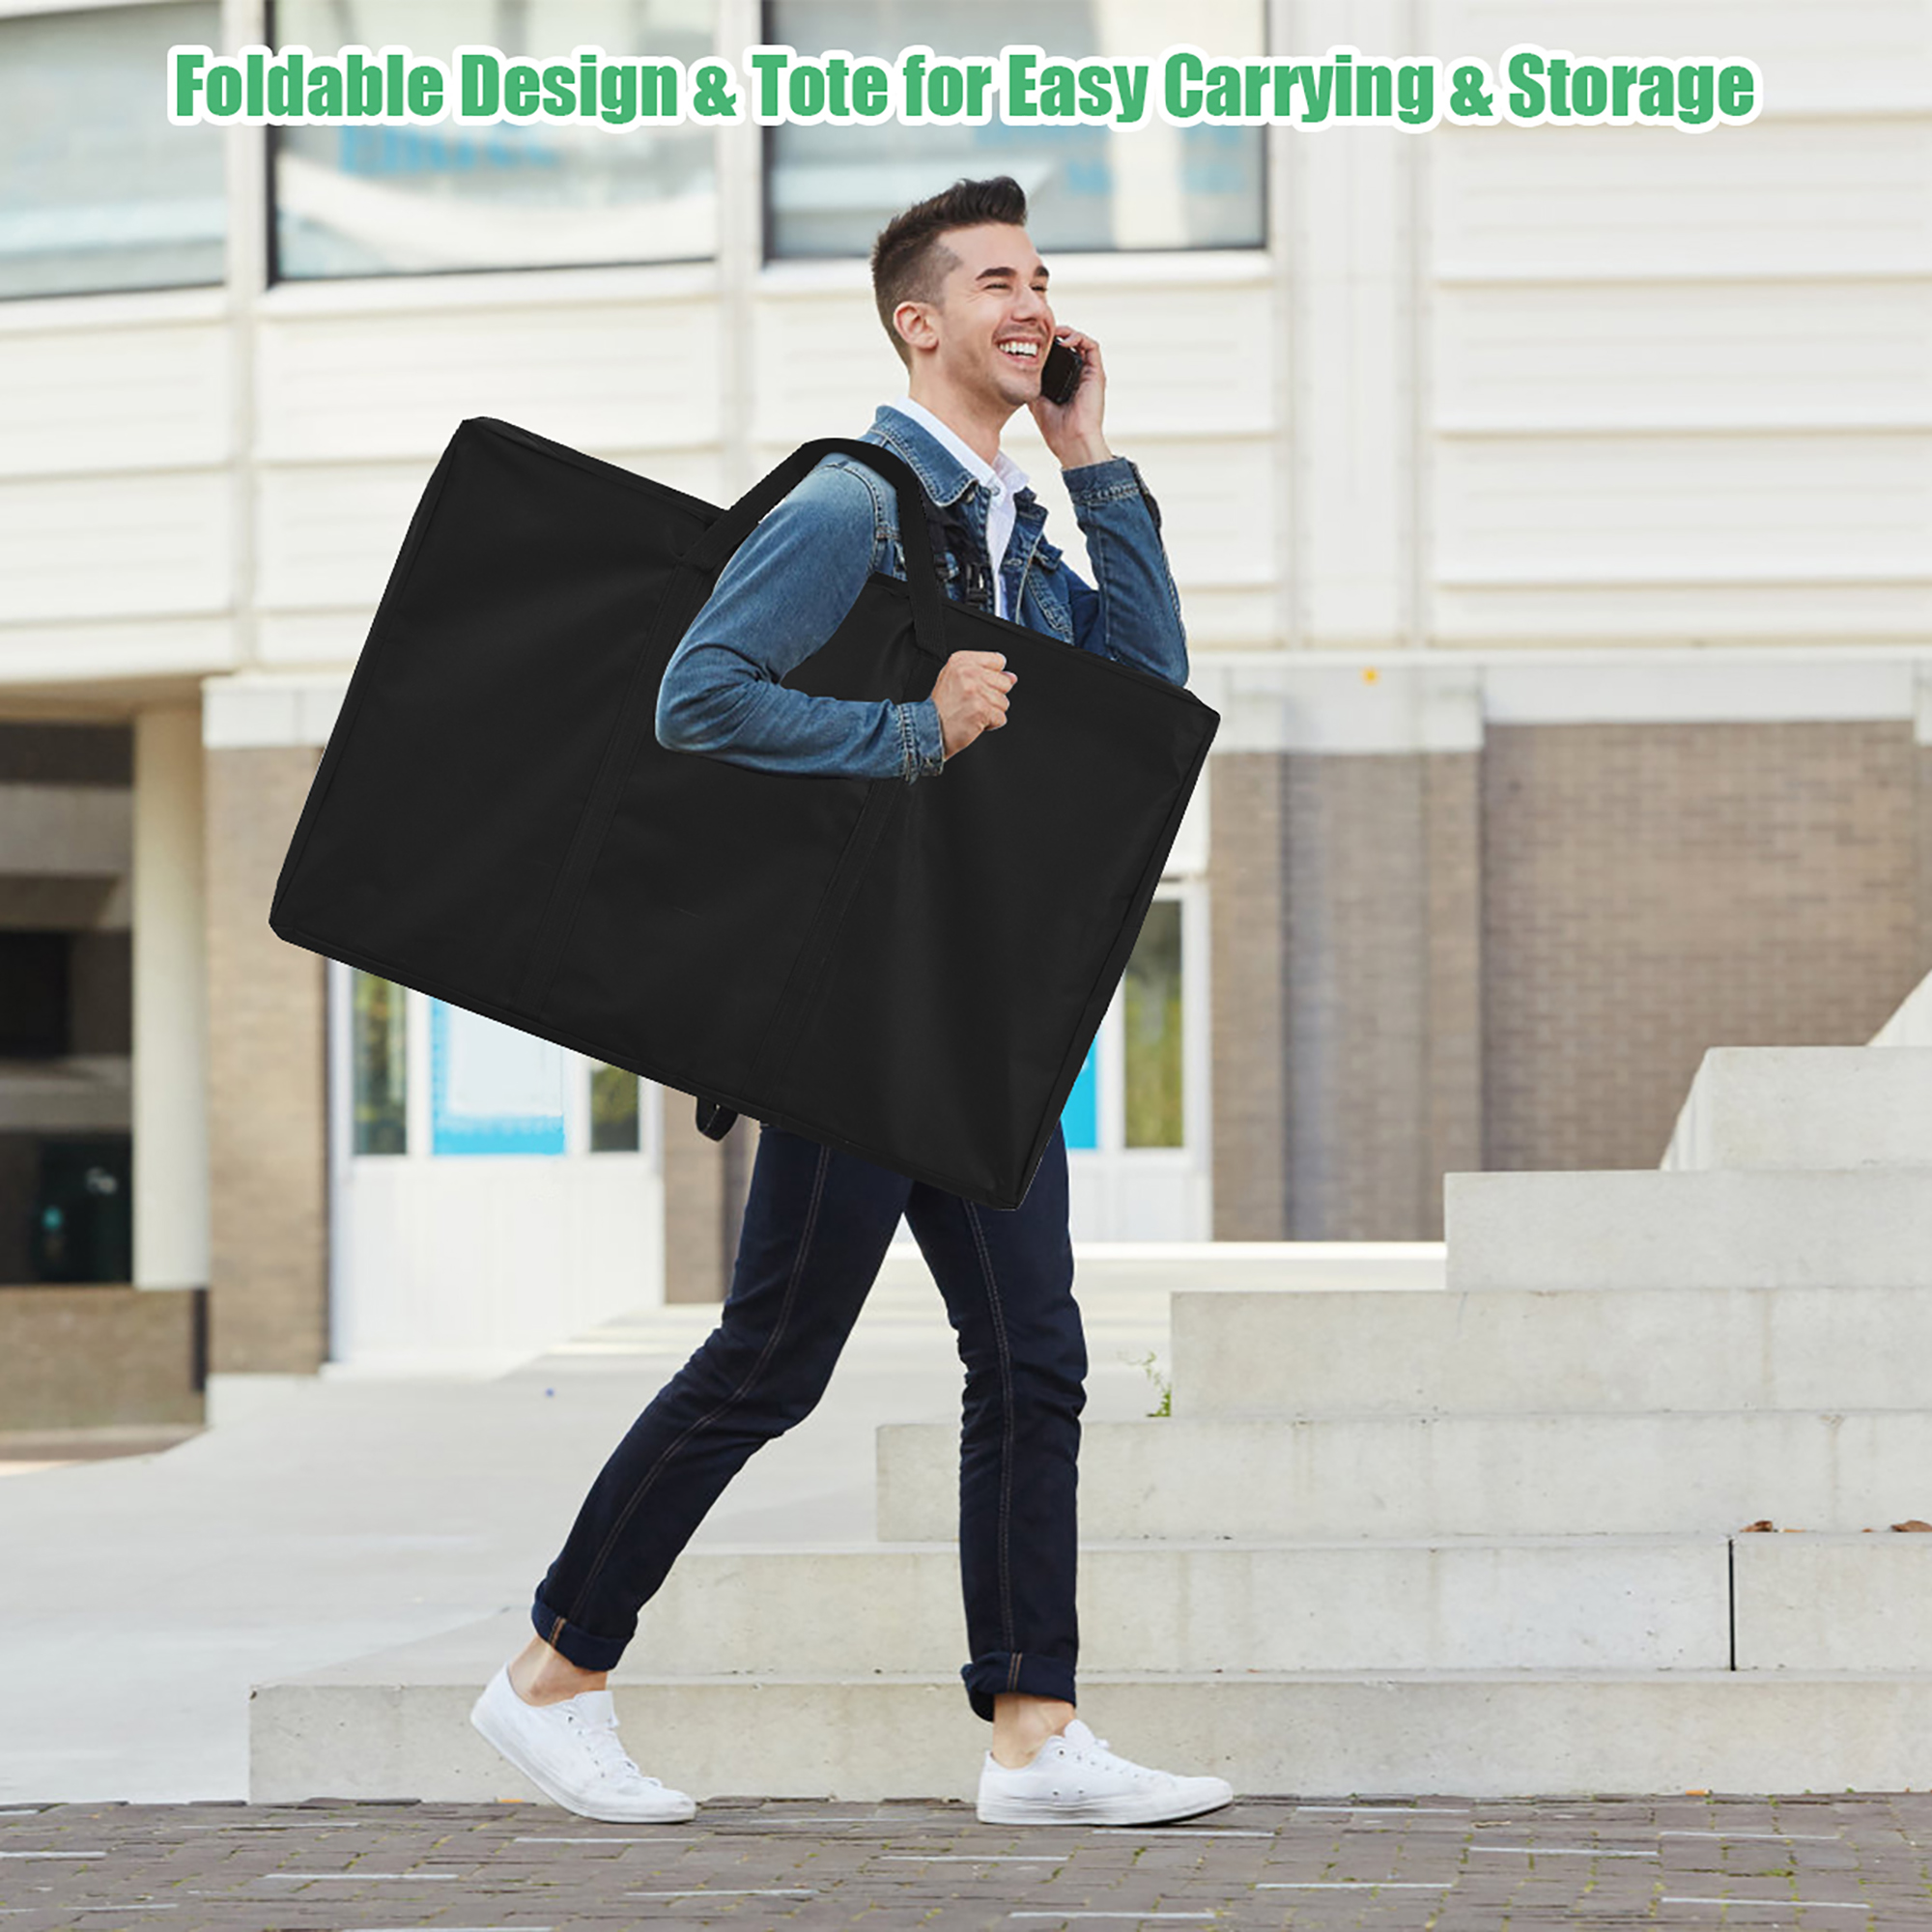 Costway Foldable Bean Bag Toss Cornhole Game Set Tailgate Regulation w/ Carrying Bag - image 5 of 10